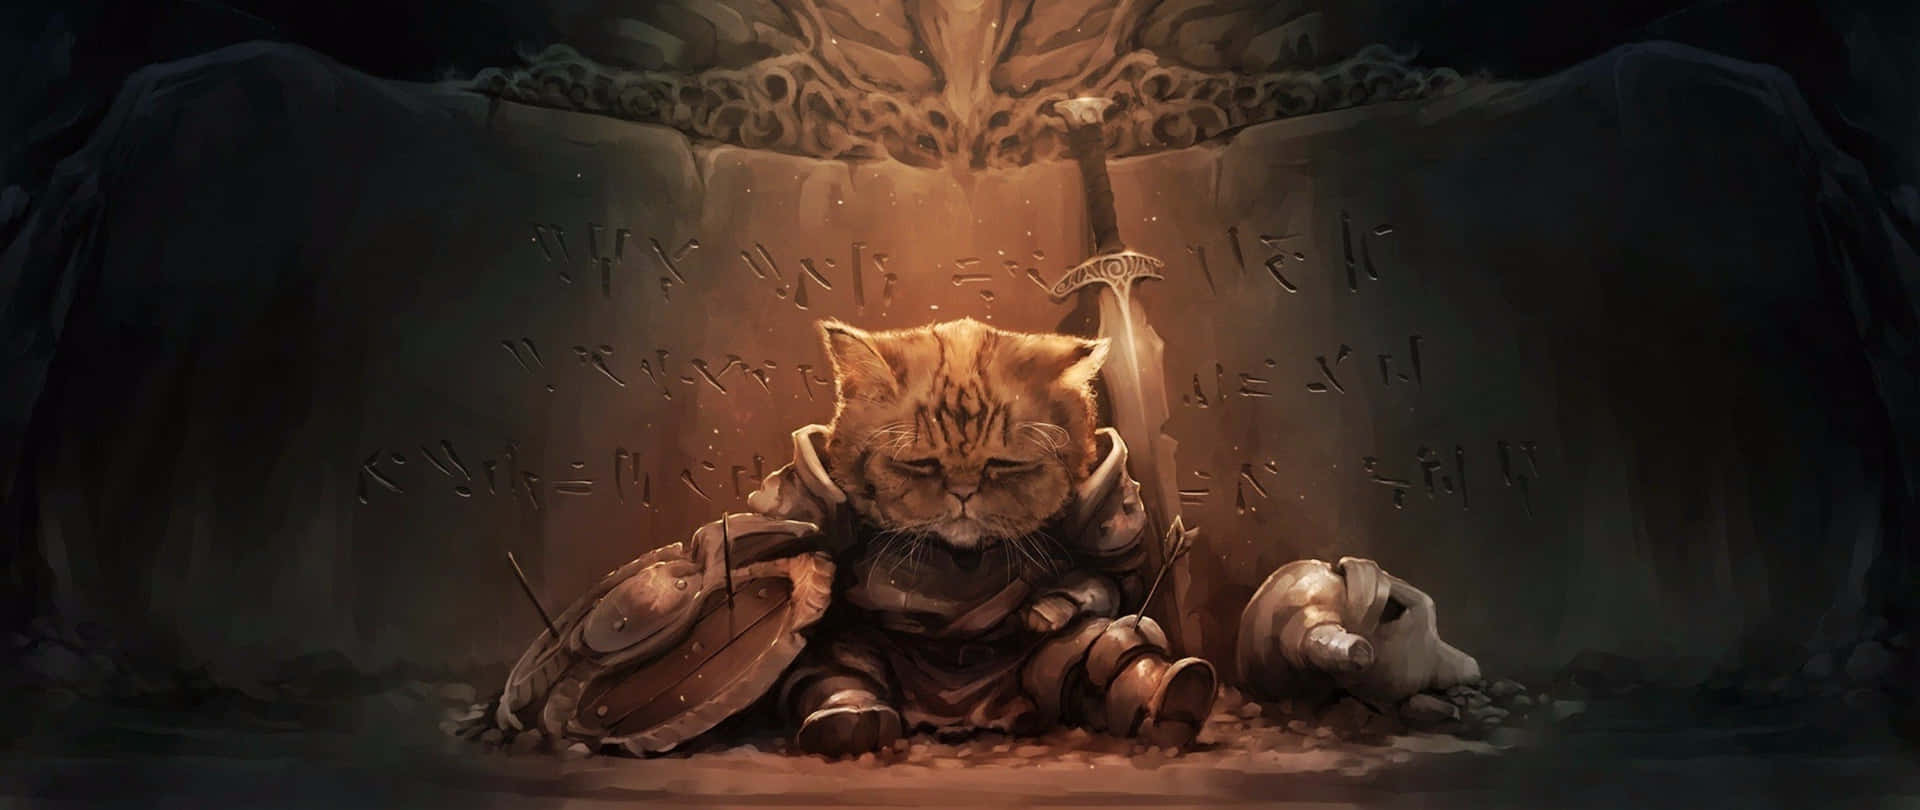 warrior cat villains - Google Search